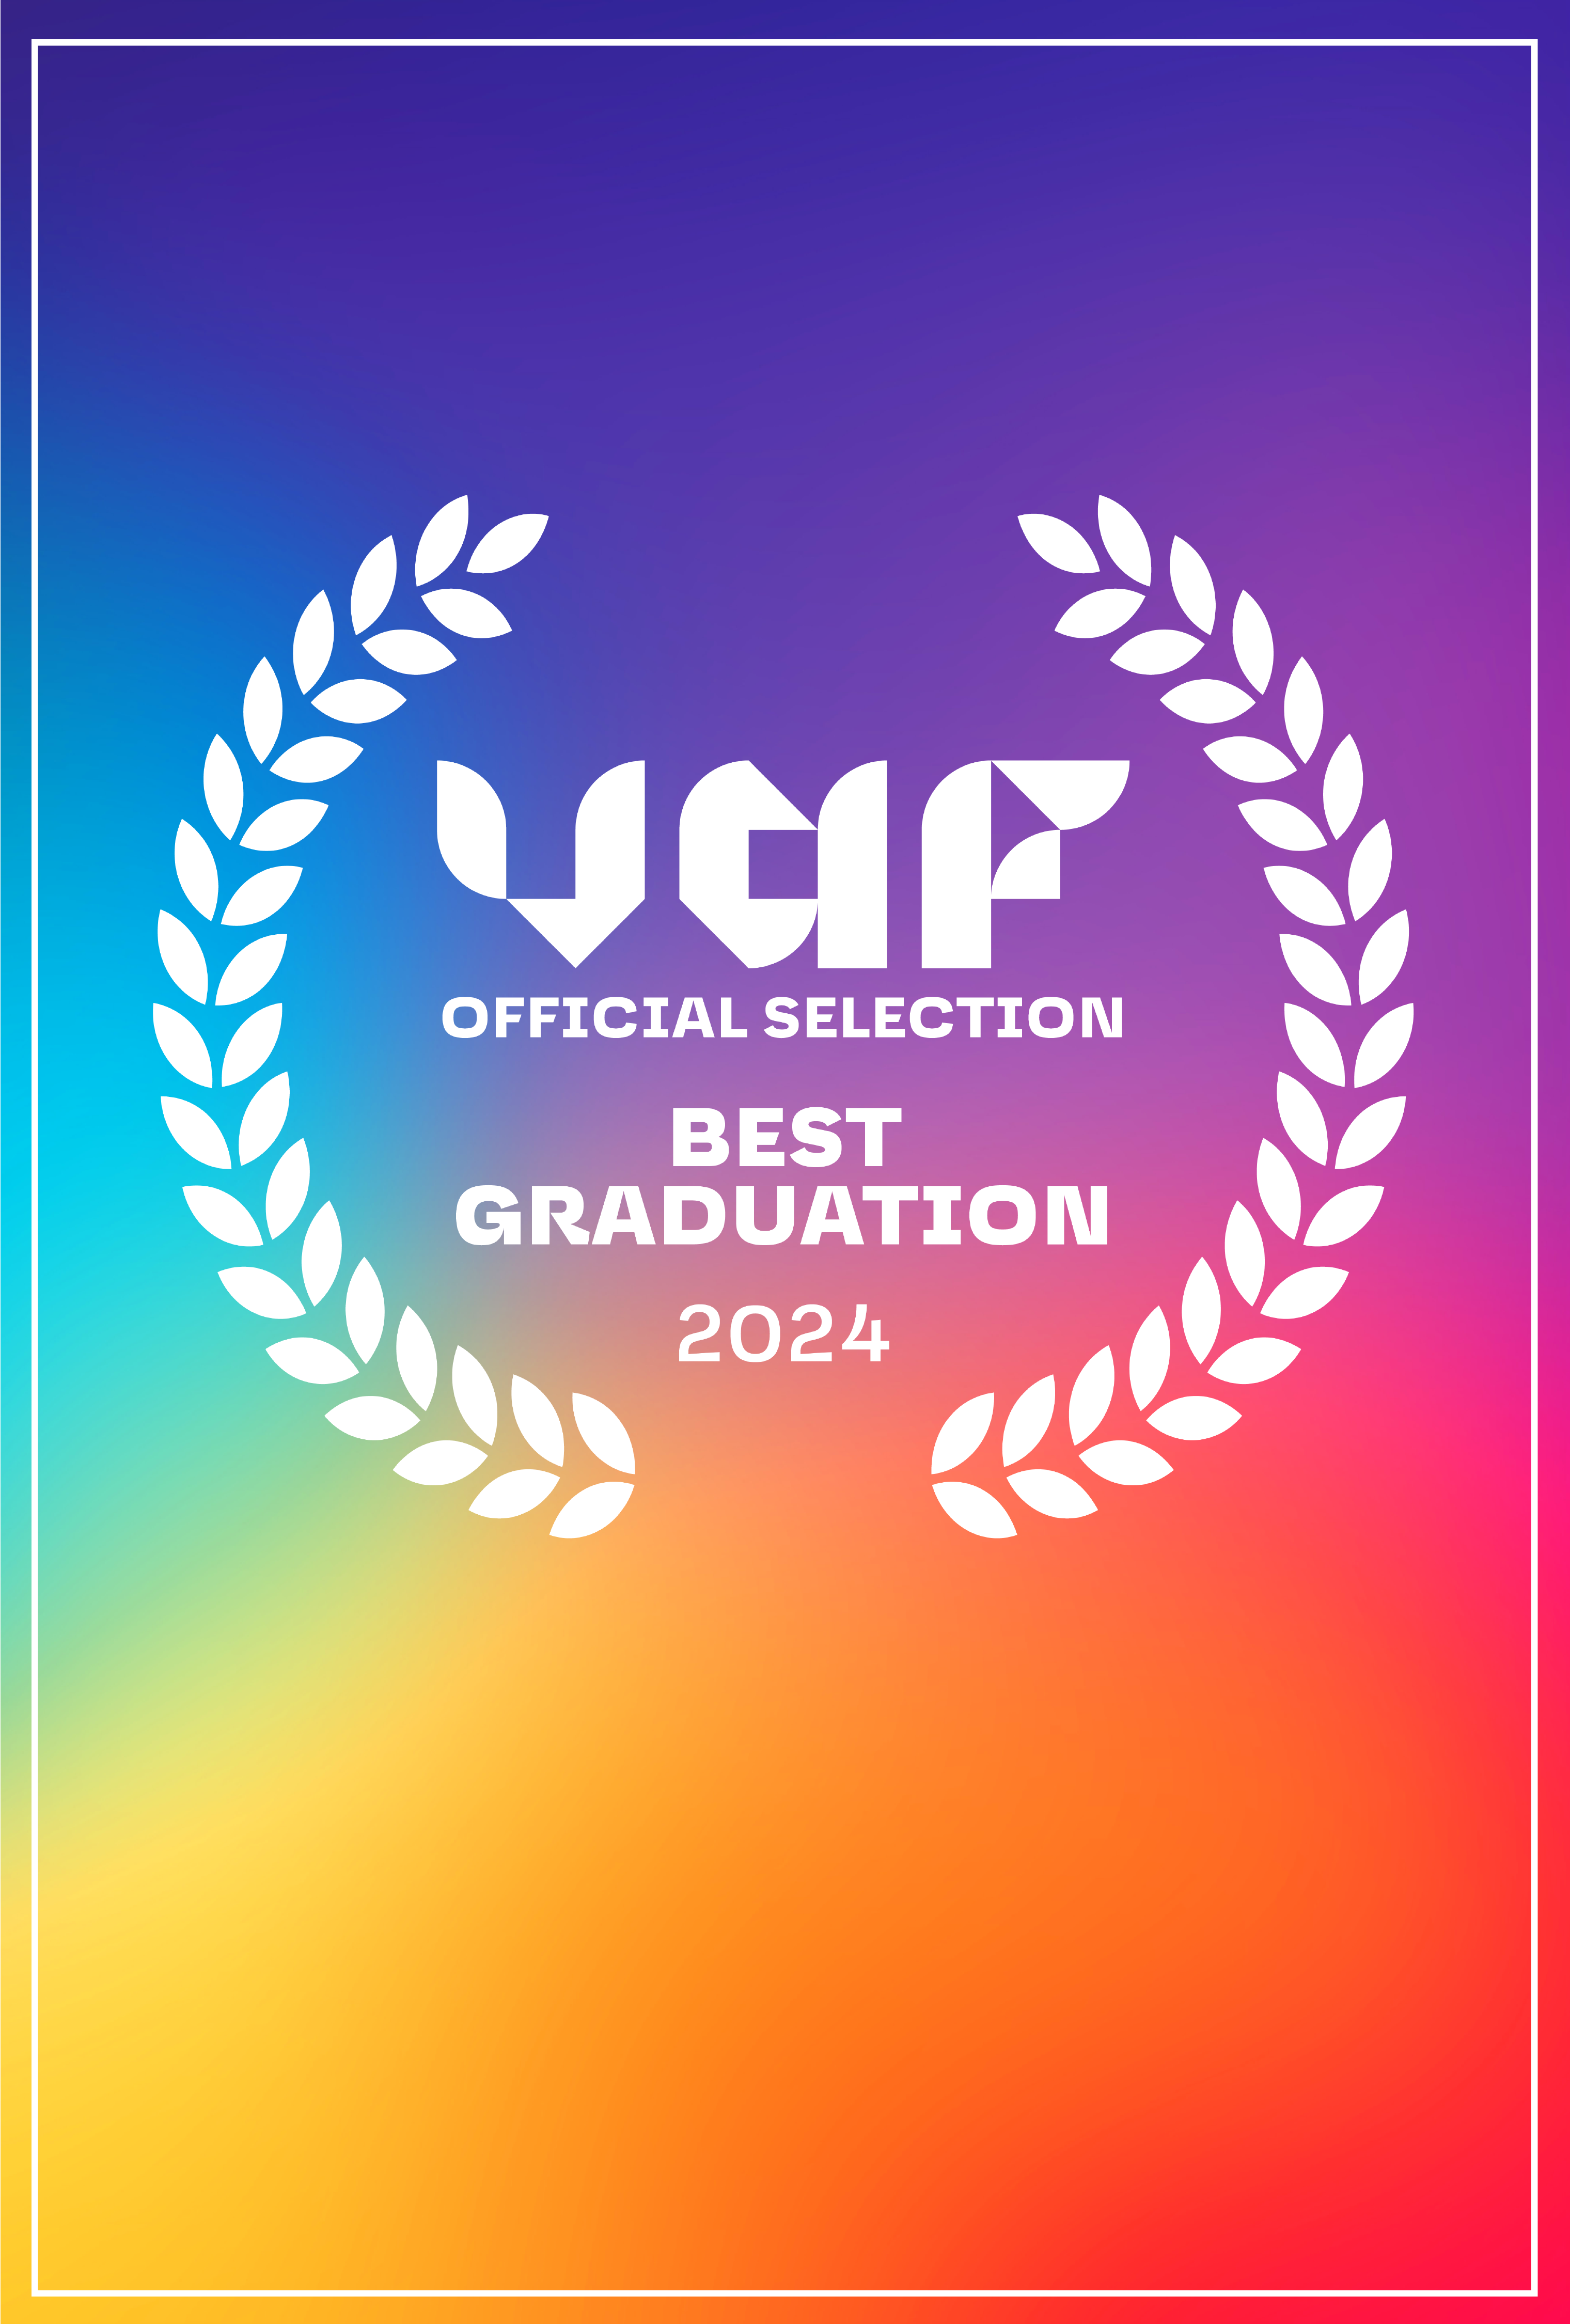 Laurel på en regnbue baggrund med teksten Best Graduation 2024